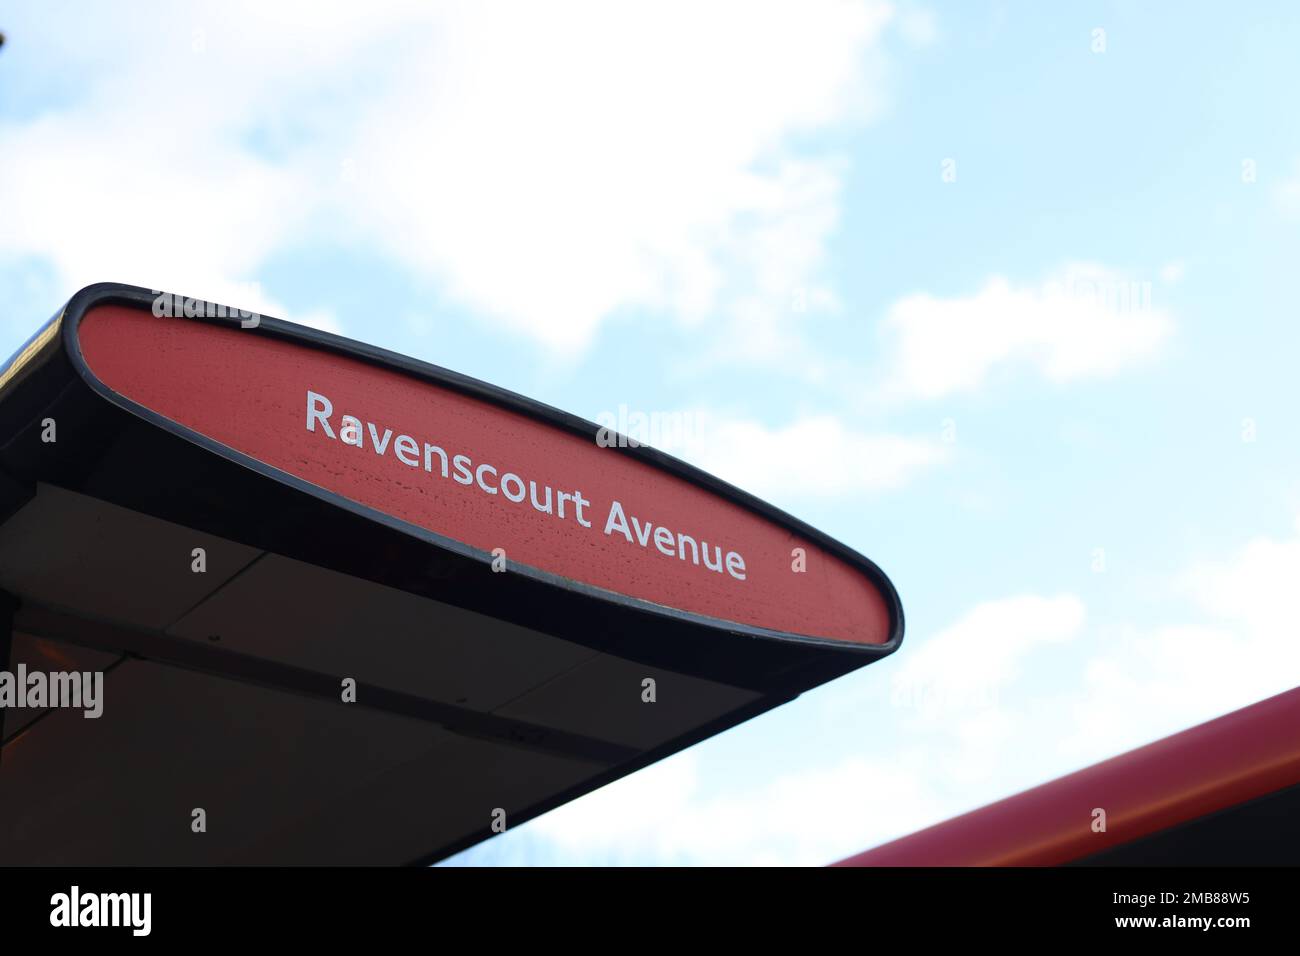 Ravenscourt Avenue bus stop, west London. Credit: Sinai Noor/Alamy Stock Photo